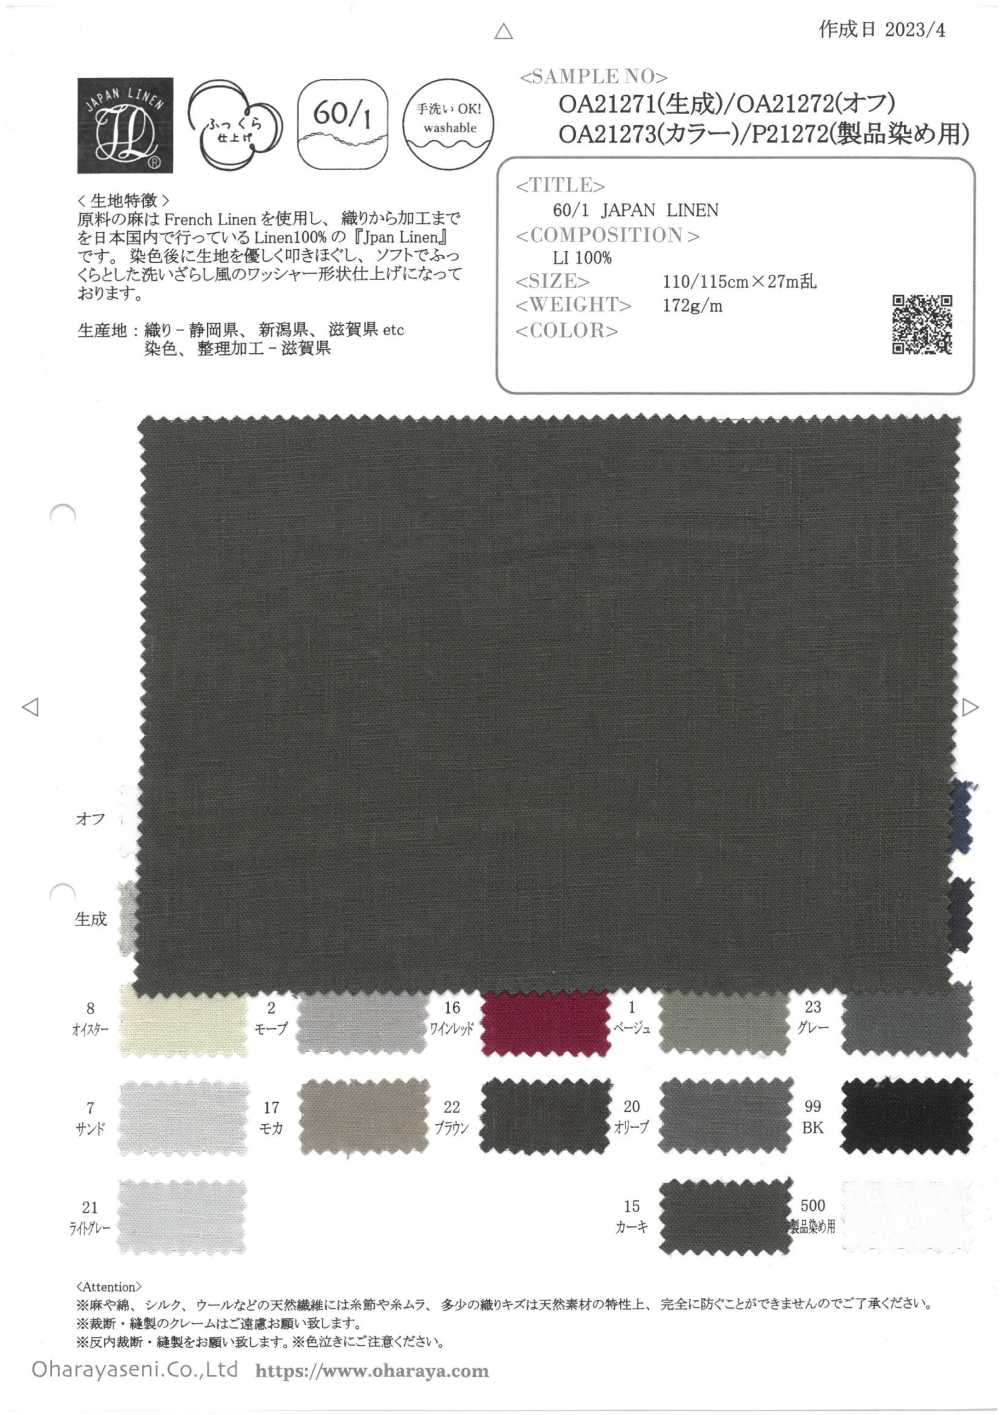 P21272 60/1・JAPAN LINEN (PFD)[Textile / Fabric] Oharayaseni